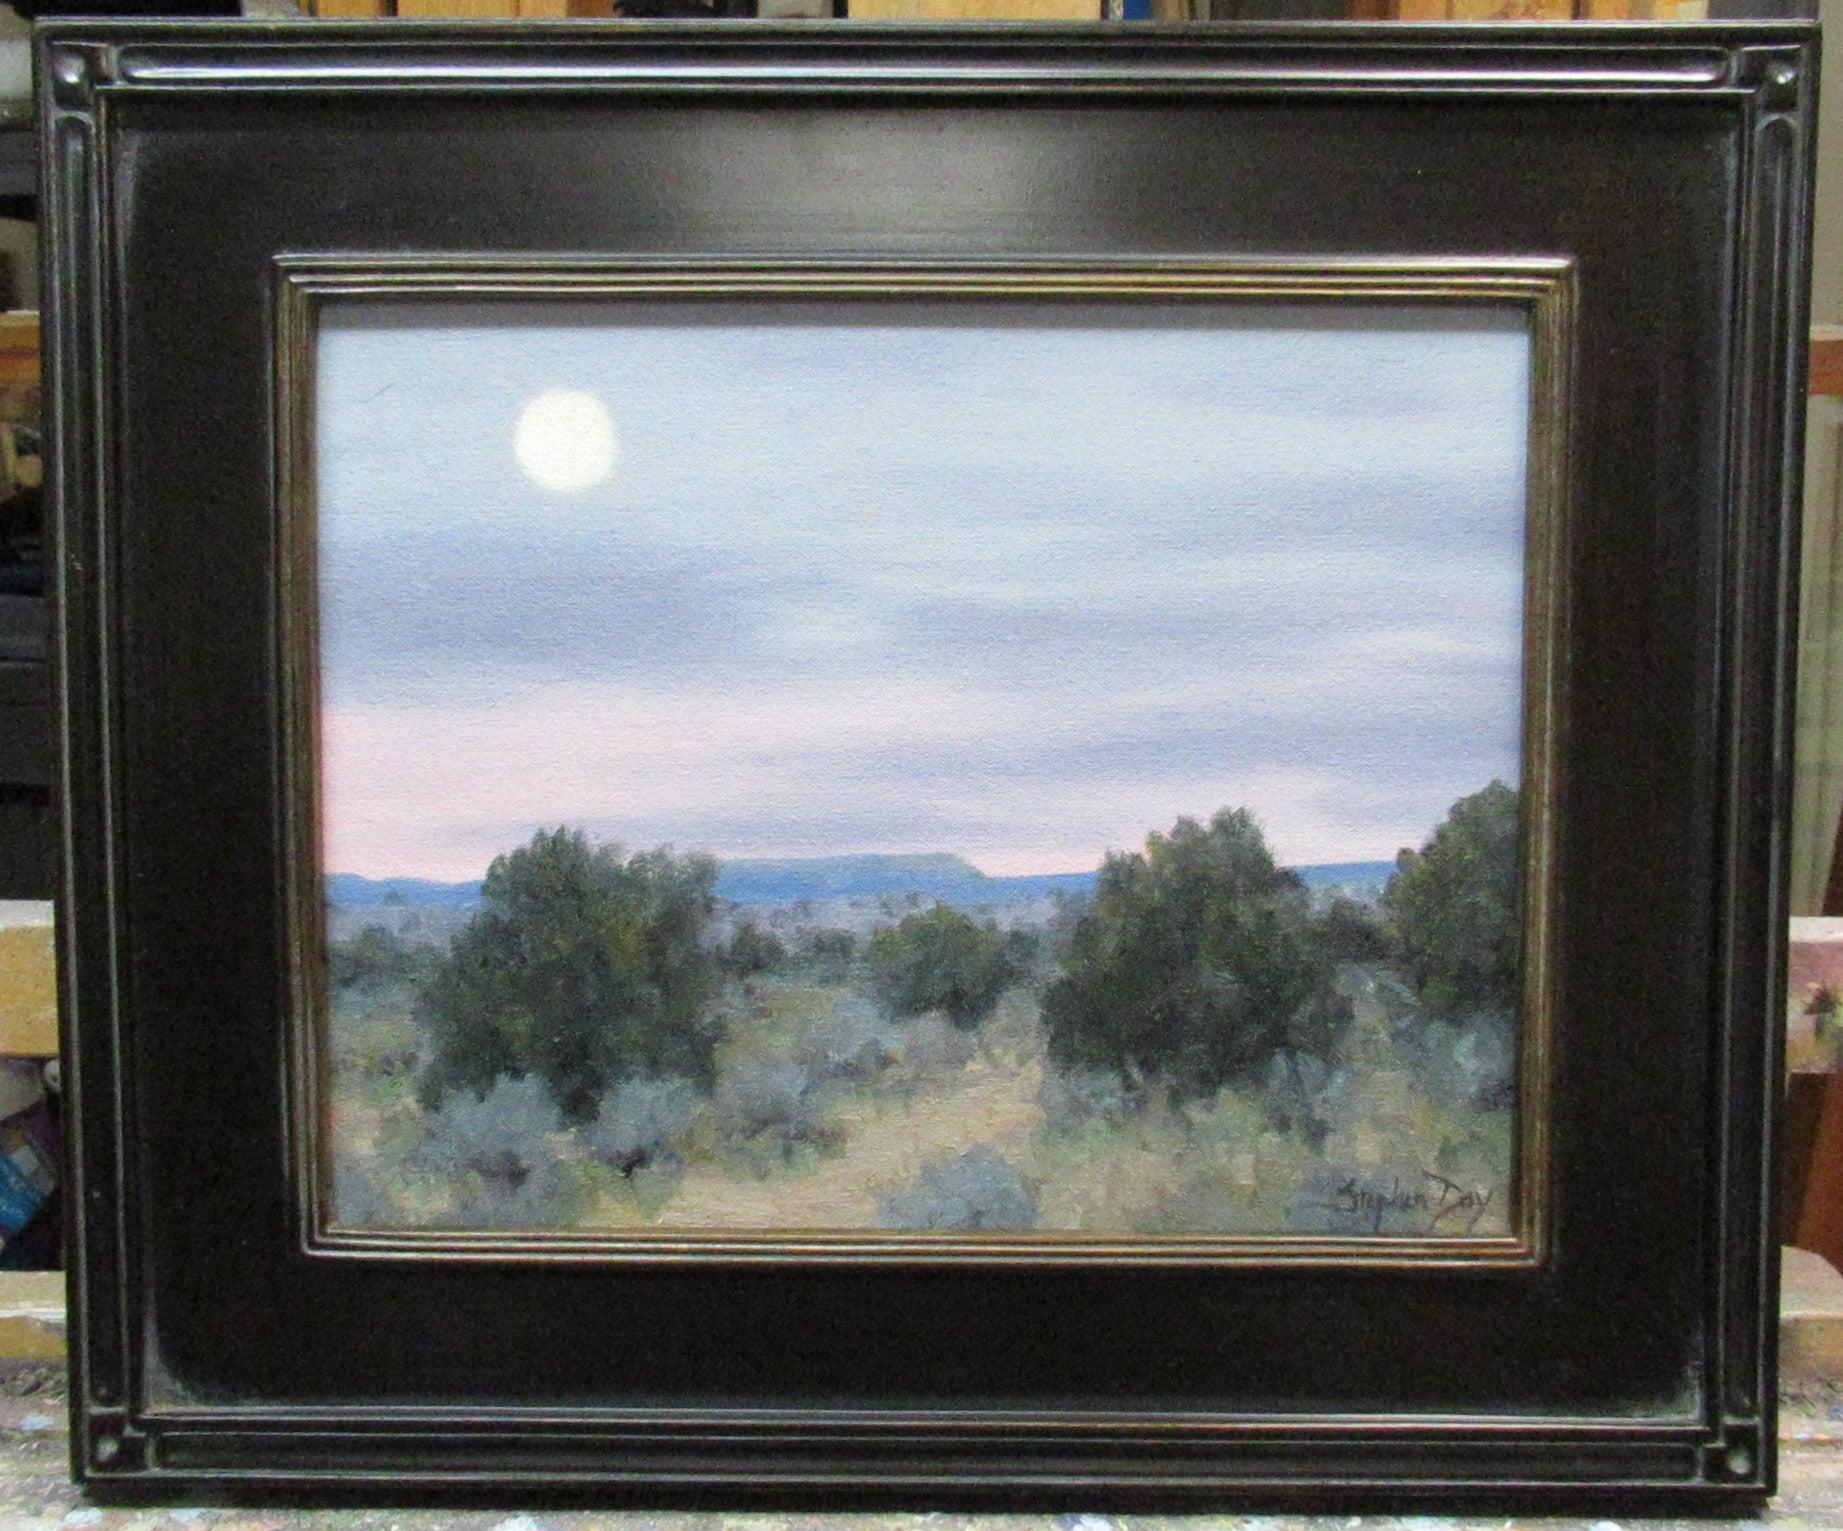 Glowing Moon-Painting-Stephen Day-Sorrel Sky Gallery